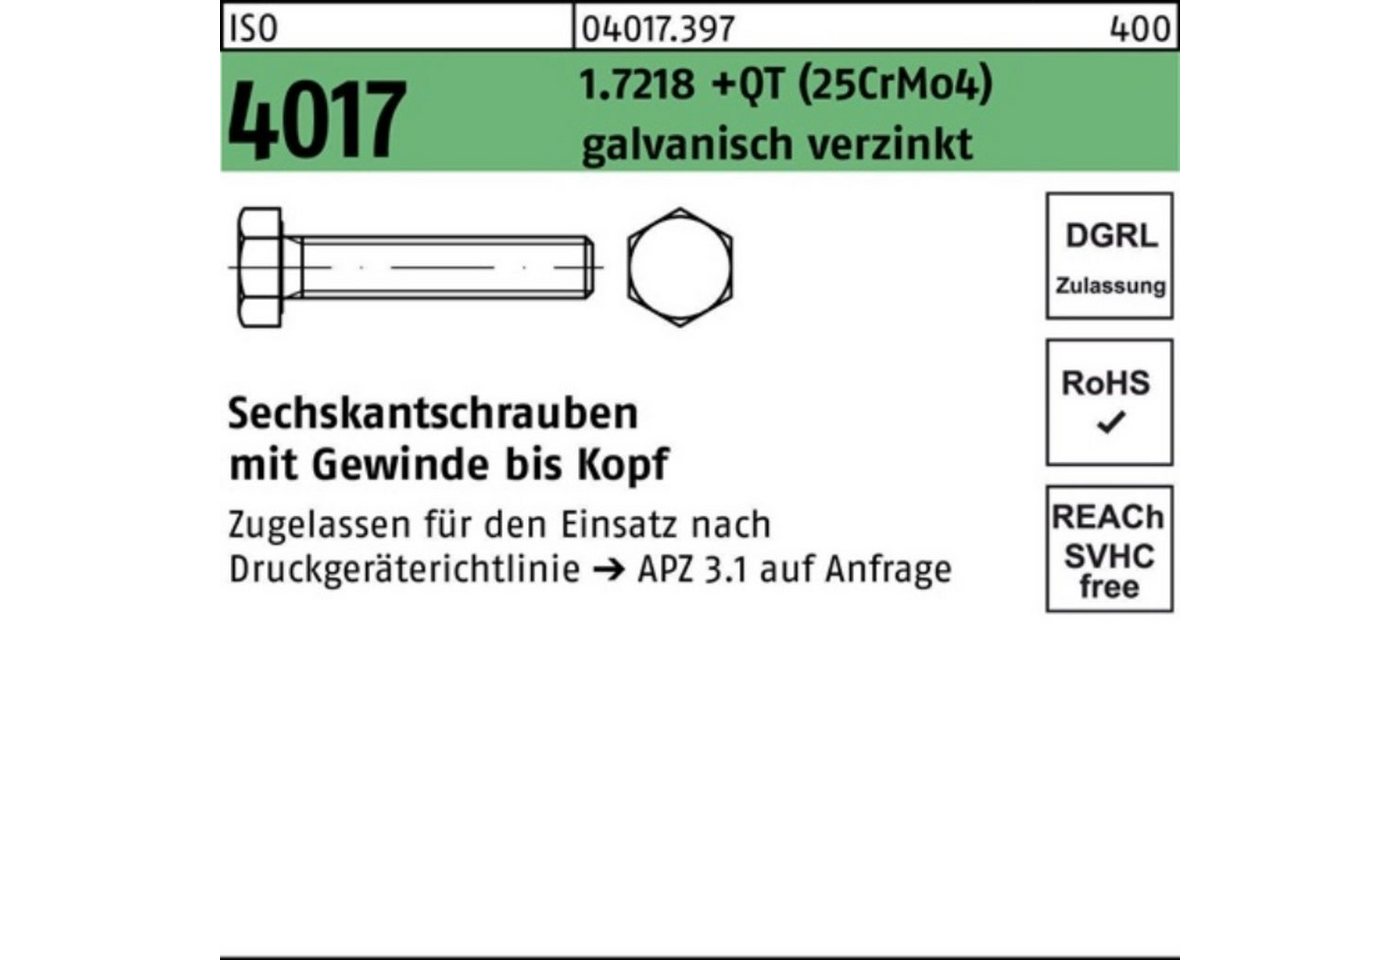 Bufab Sechskantschraube 100er Pack Sechskantschraube ISO 4017 VG M20x45 1.7218 +QT (25CrMo4) g von Bufab